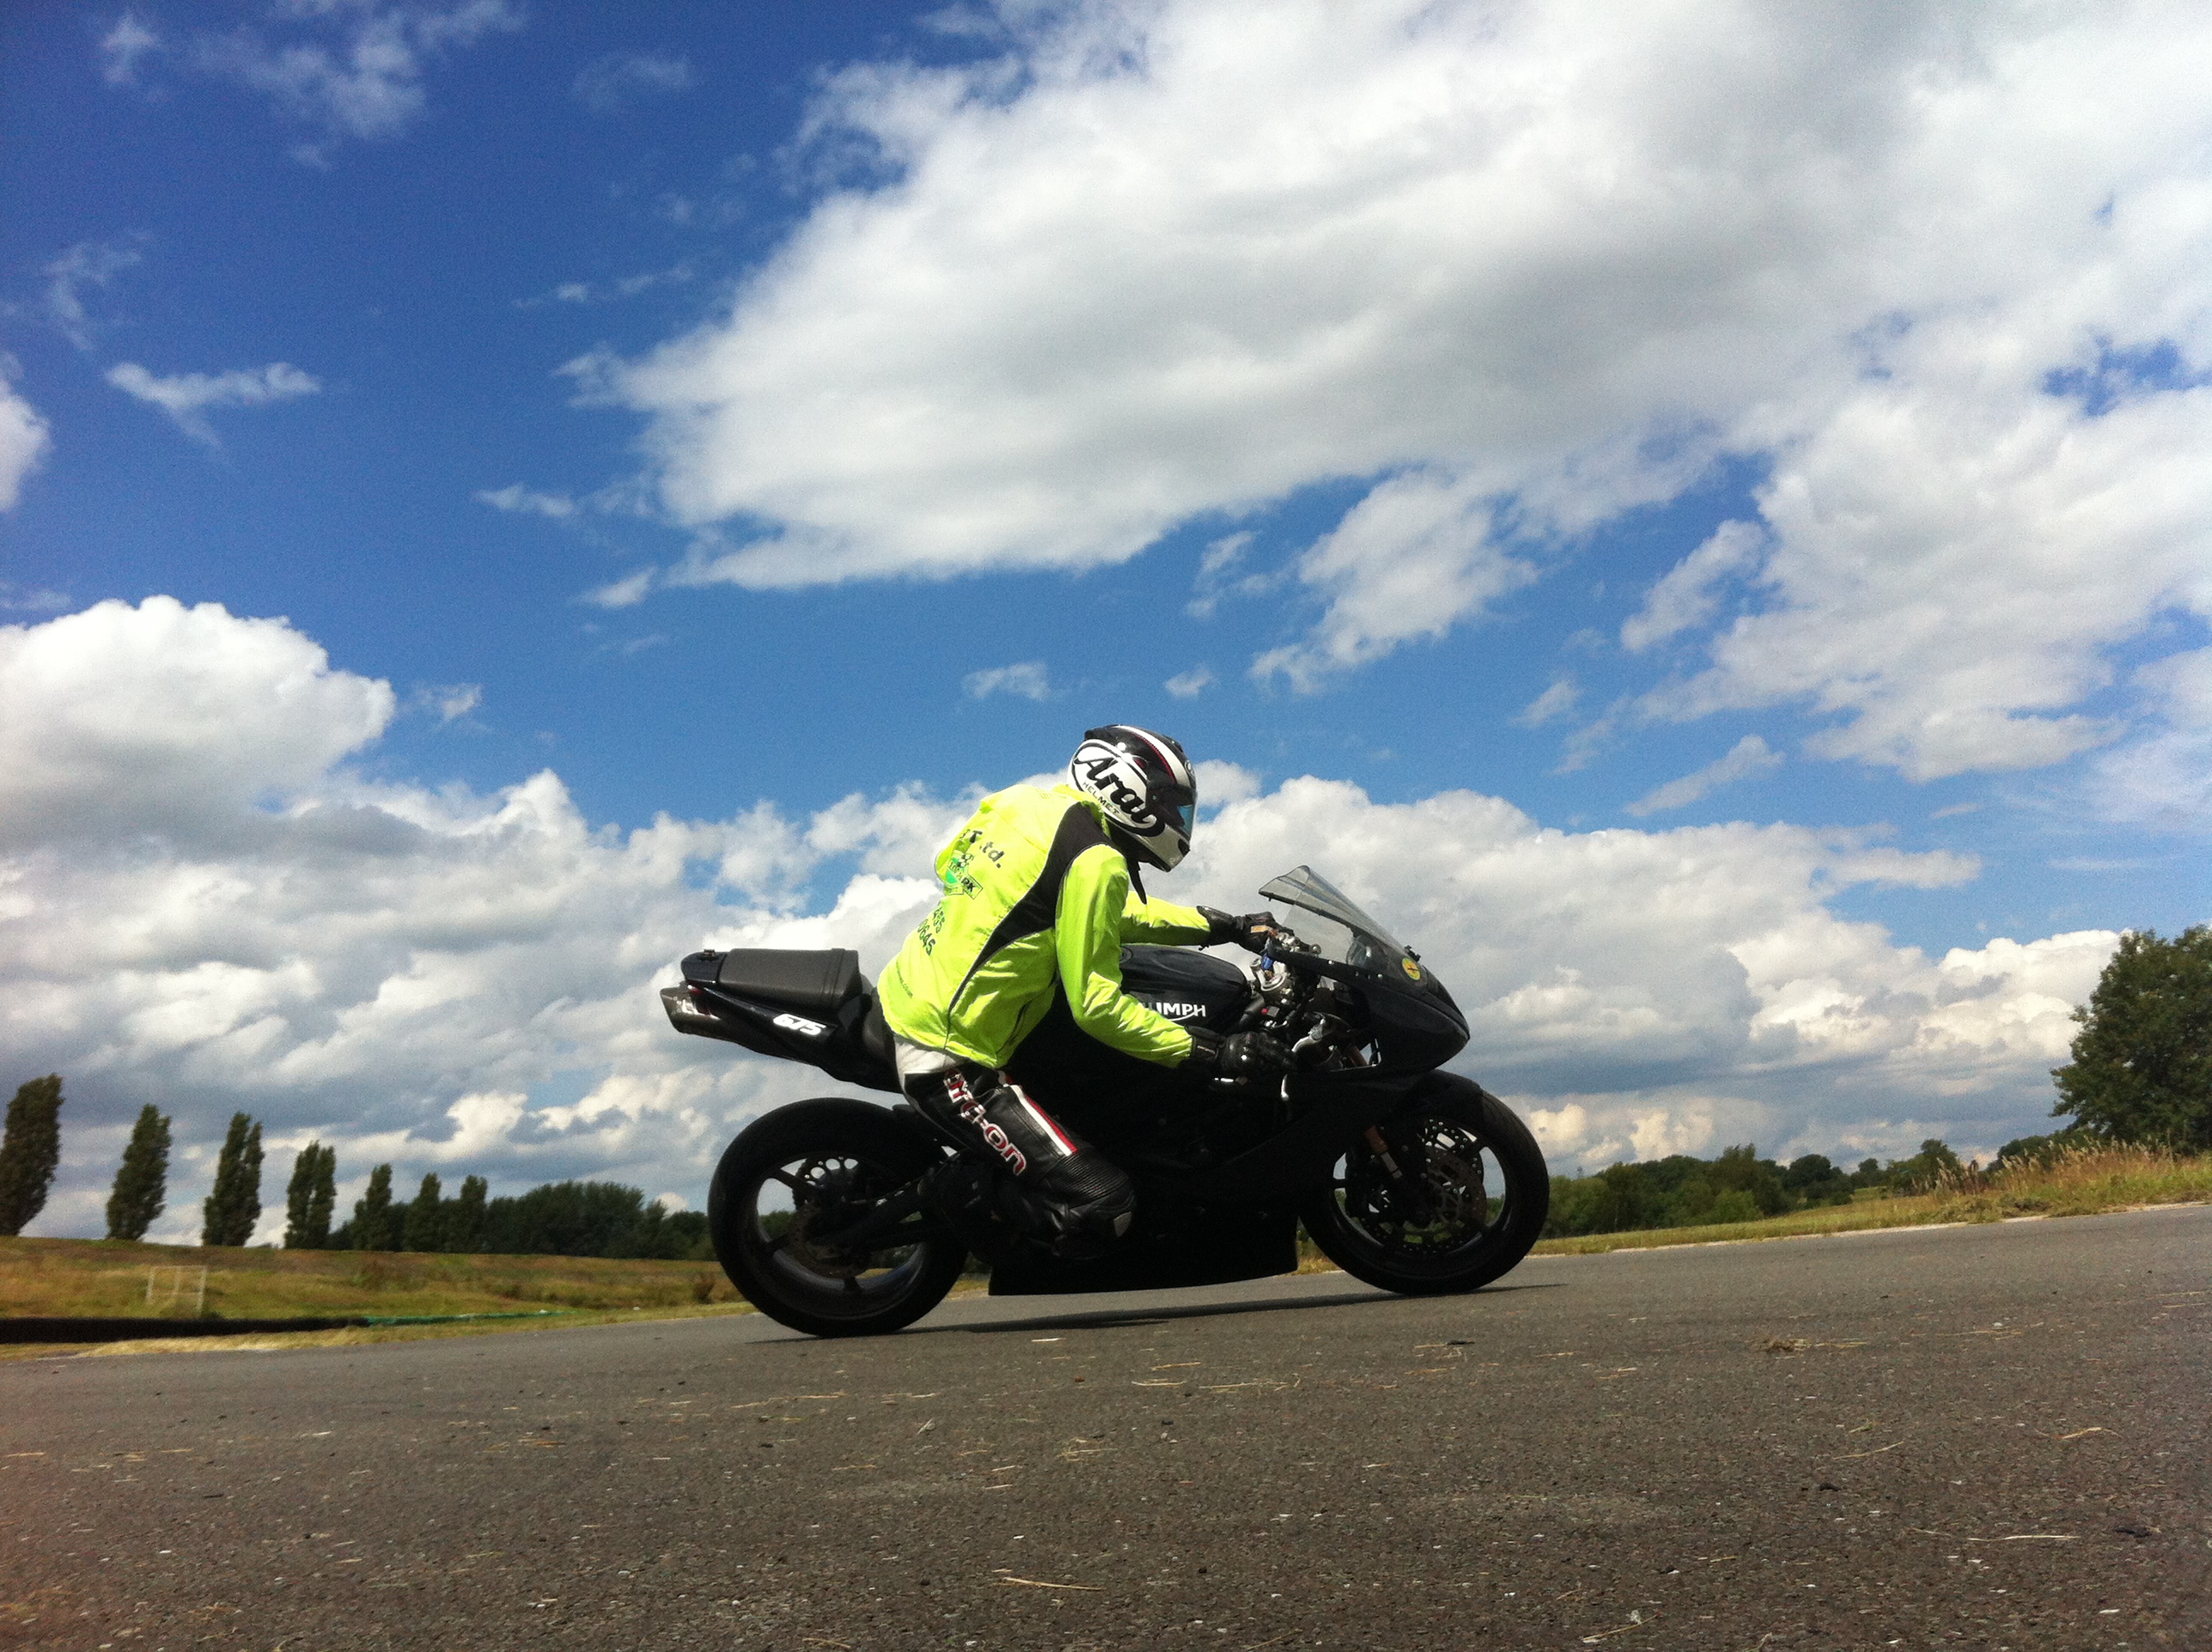 Motorbike test in Lincoln, Grantham, Banbury, Bletchley, Leighton Buzzard